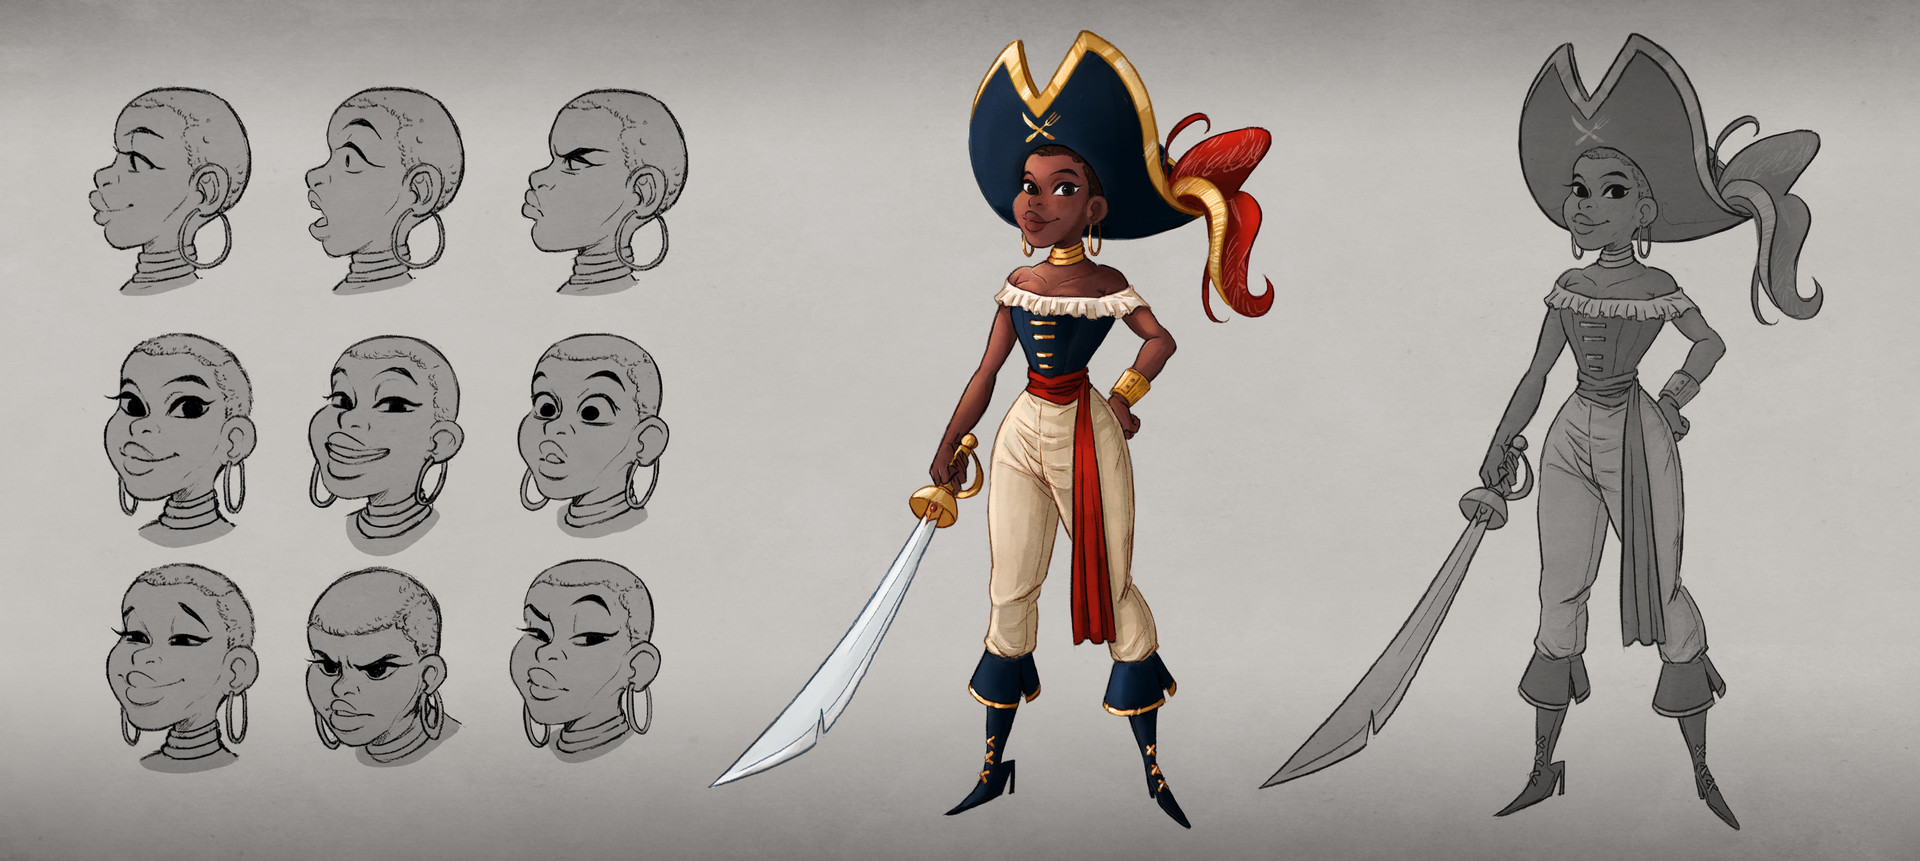 Luppi | Tallulah Potdevin - Character Design - Pirate Crew